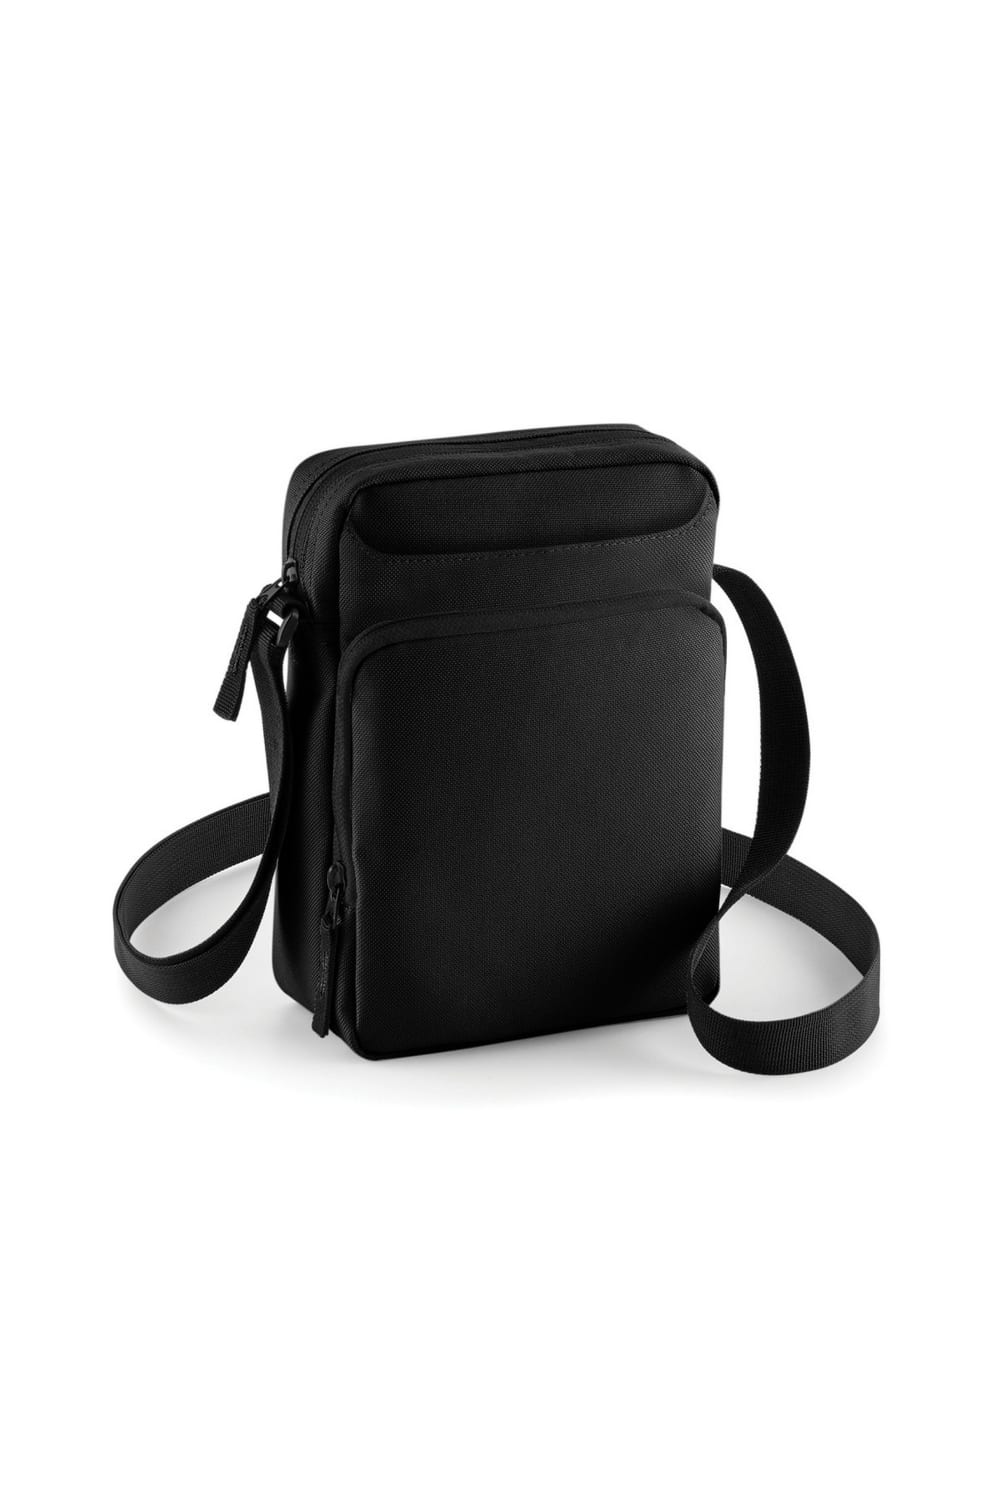 Bagbase Across Shoulder Strap Cross Body Bag (Pack of 2) (Black) (One Size)